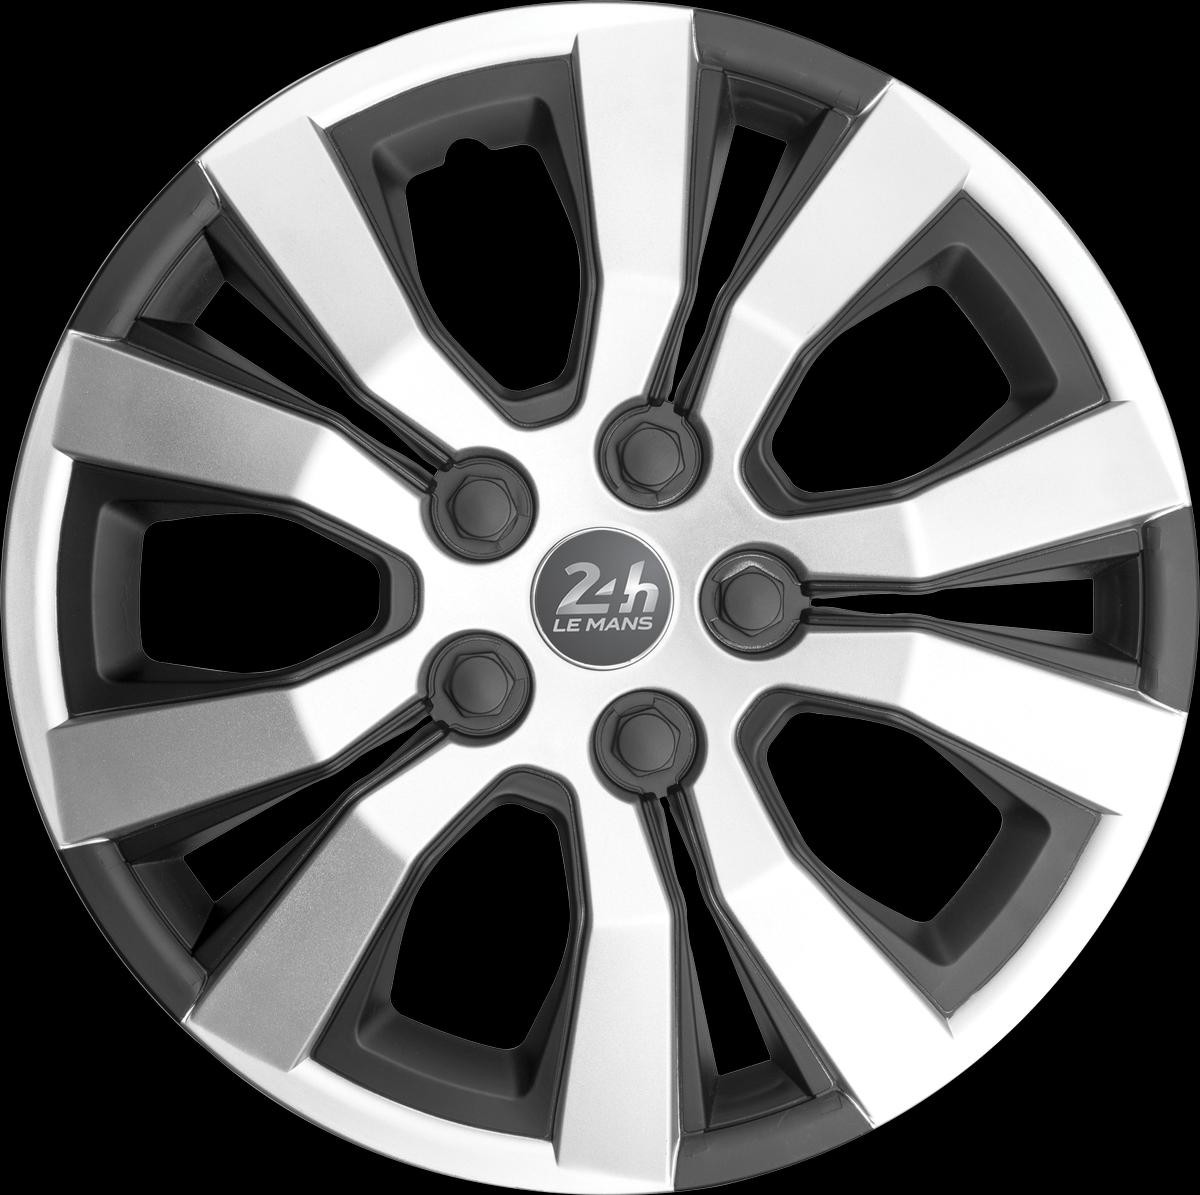 Wheel trims 24H LE MANS Mulsanne E14MUL.BBS